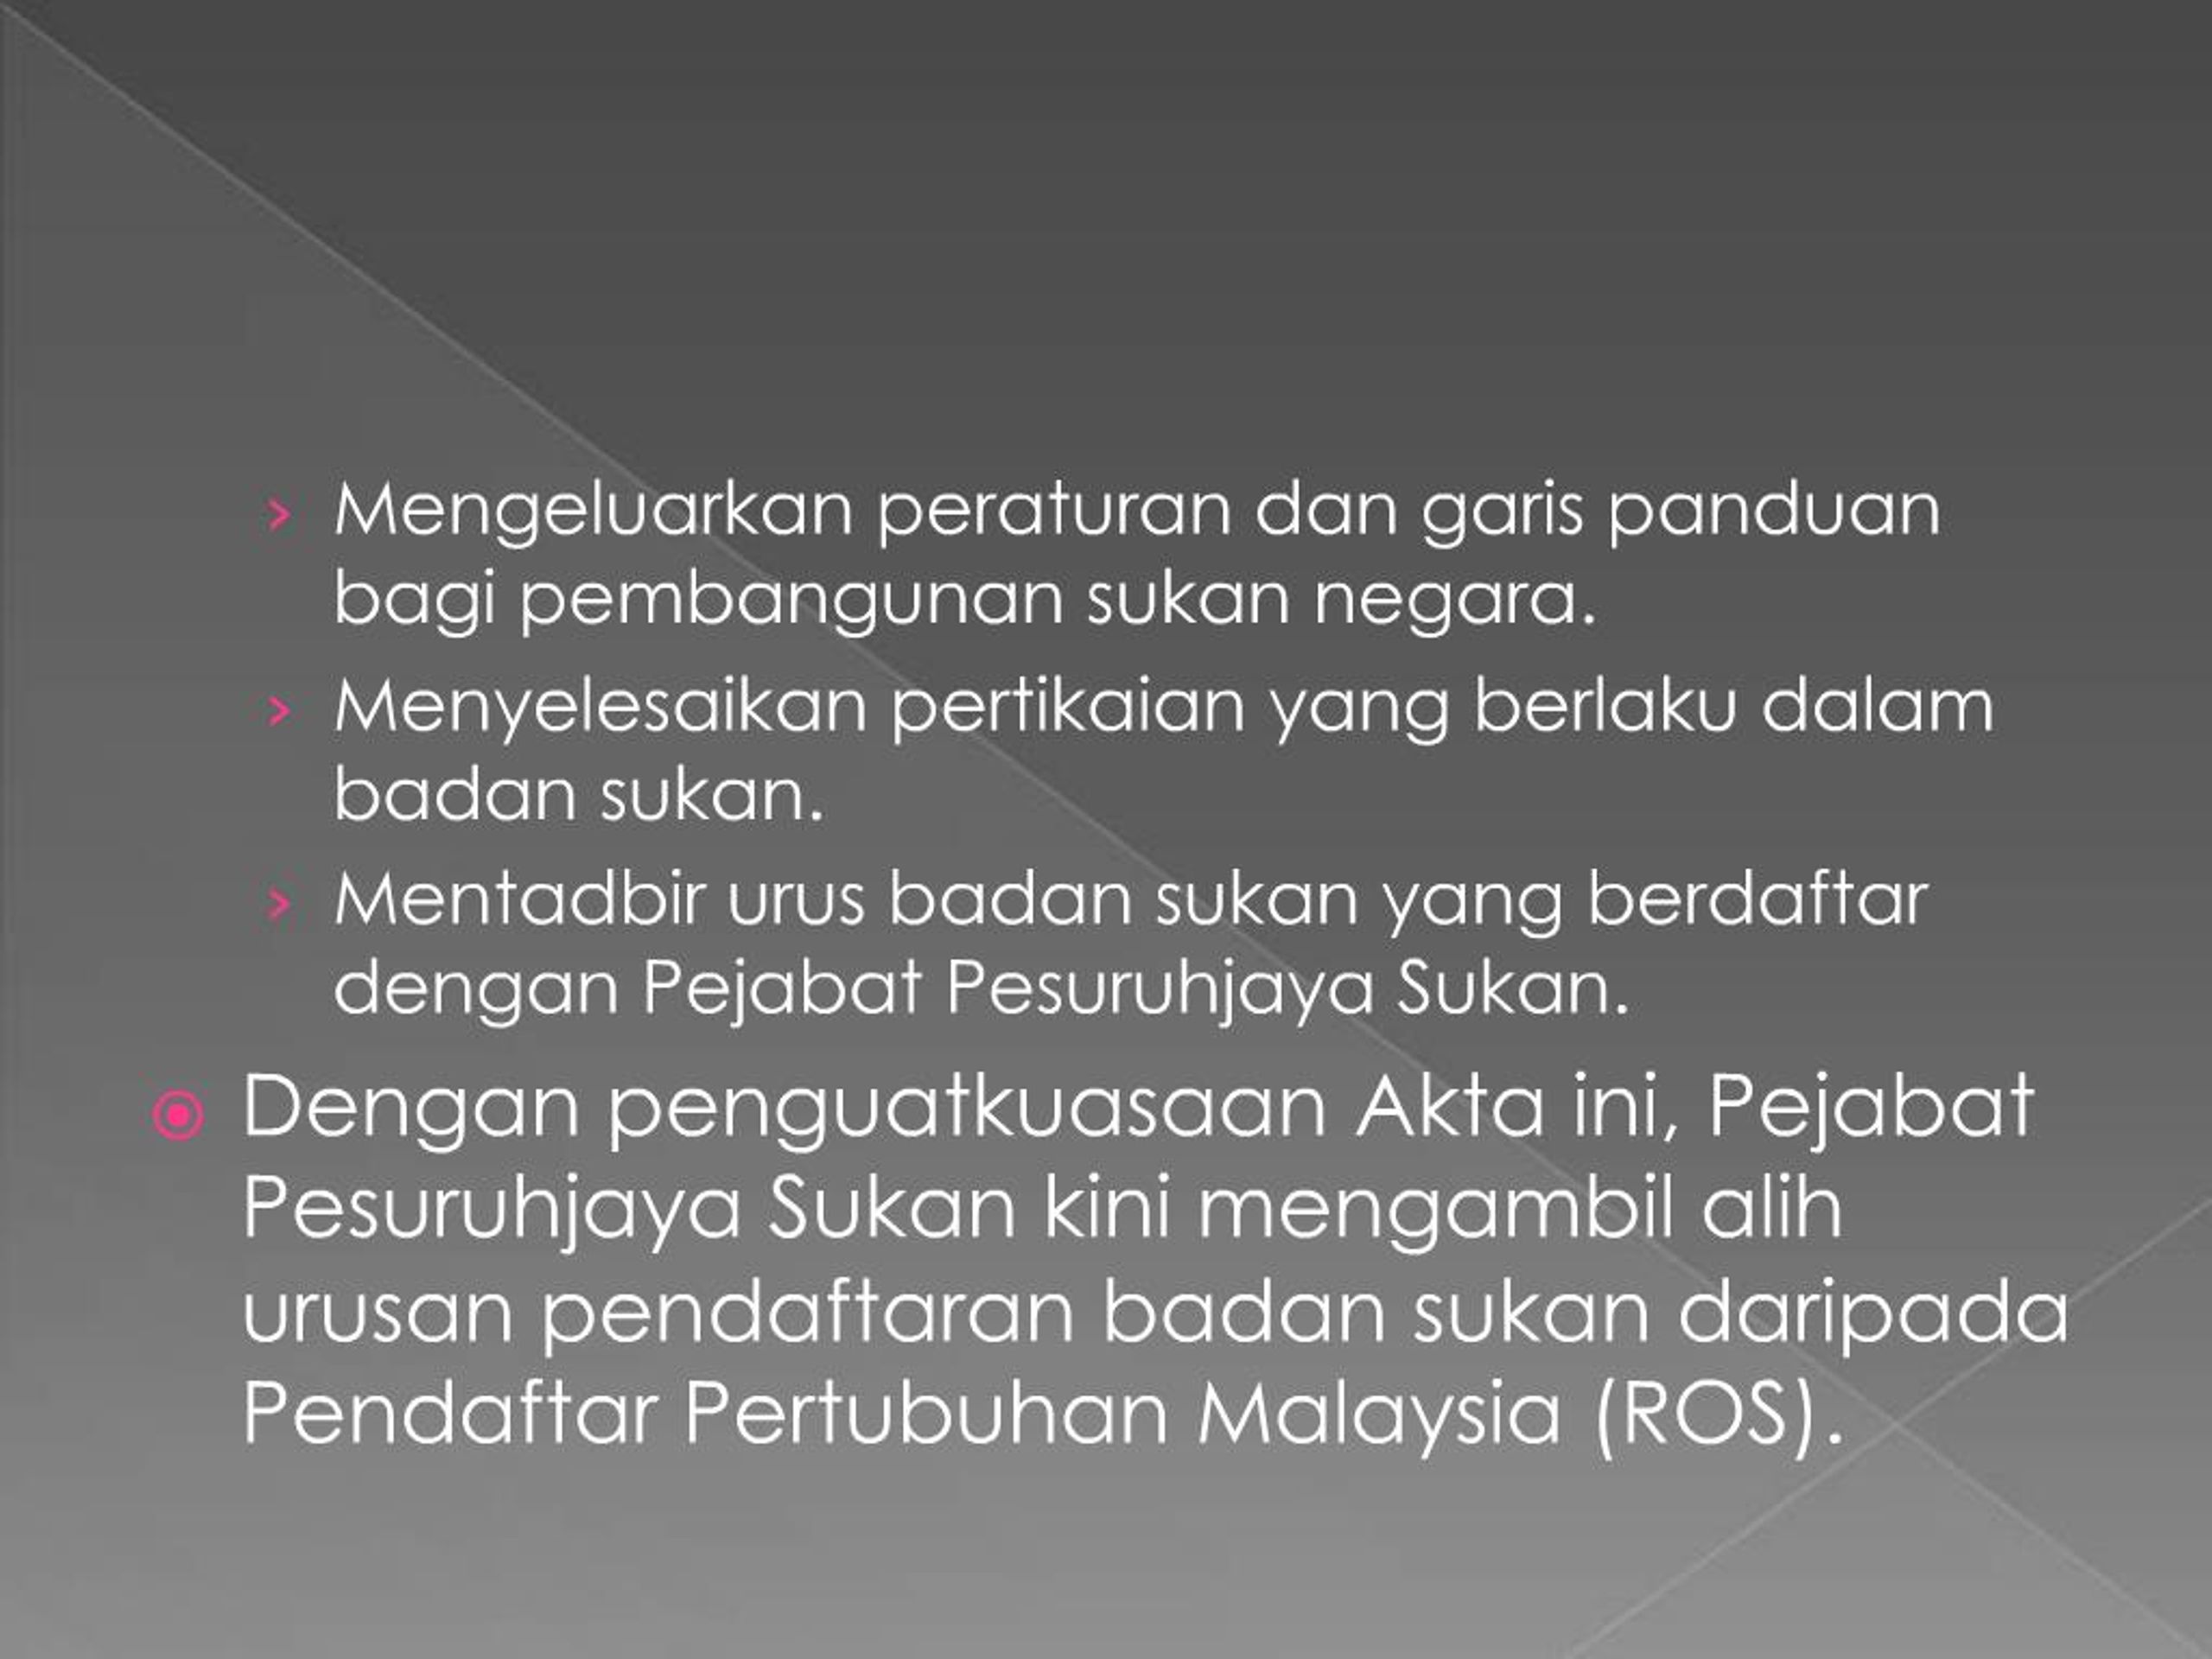 PPT - Pejabat Pesuruhjaya Sukan Malaysia PowerPoint Presentation 